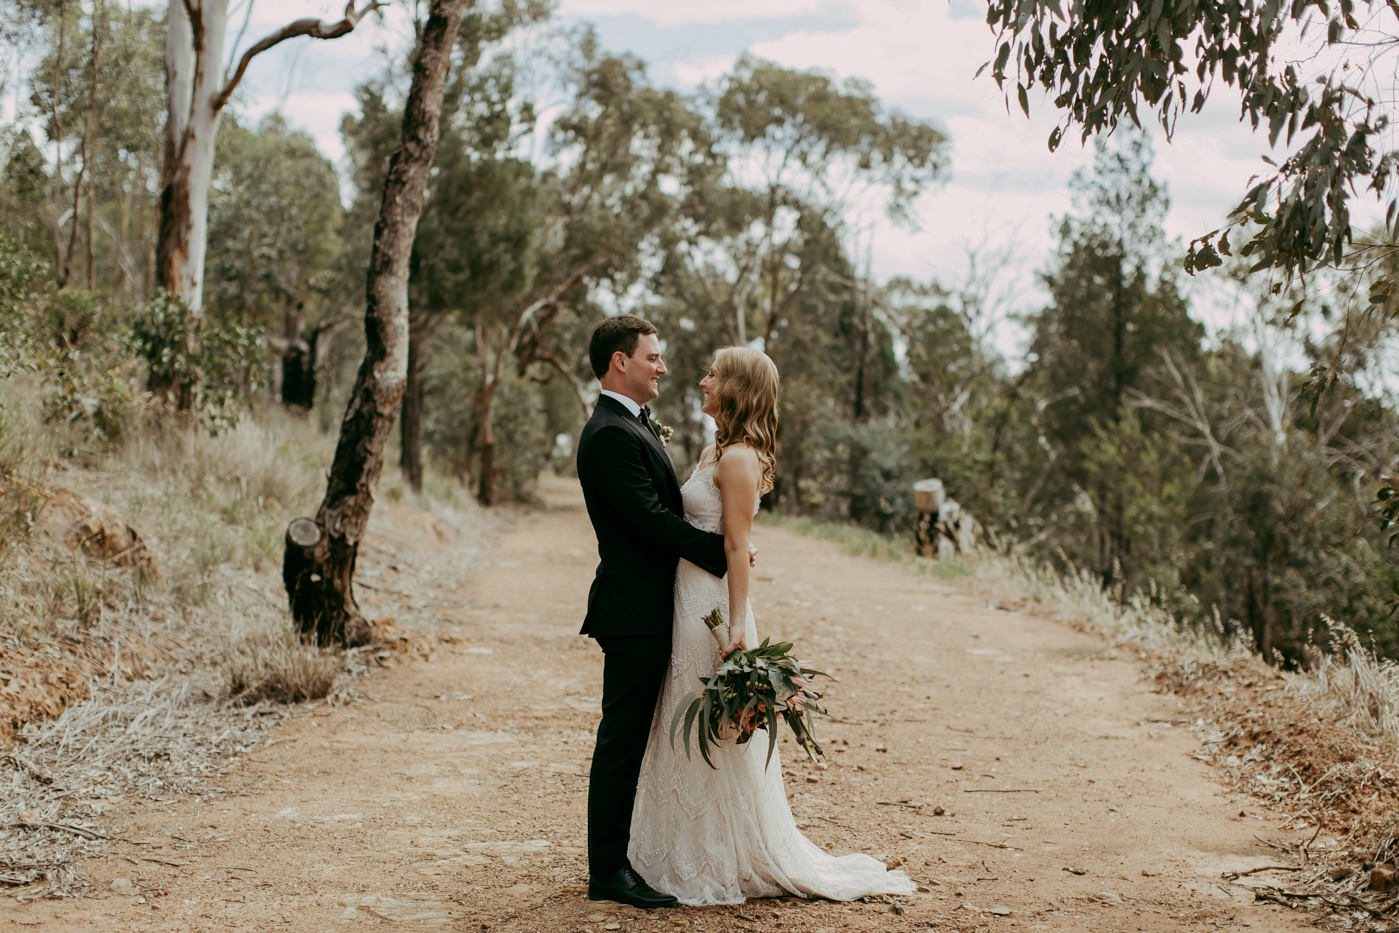 Anthony & Eliet - Wagga Wagga Wedding - Country NSW - Samantha Heather Photography-53.jpg